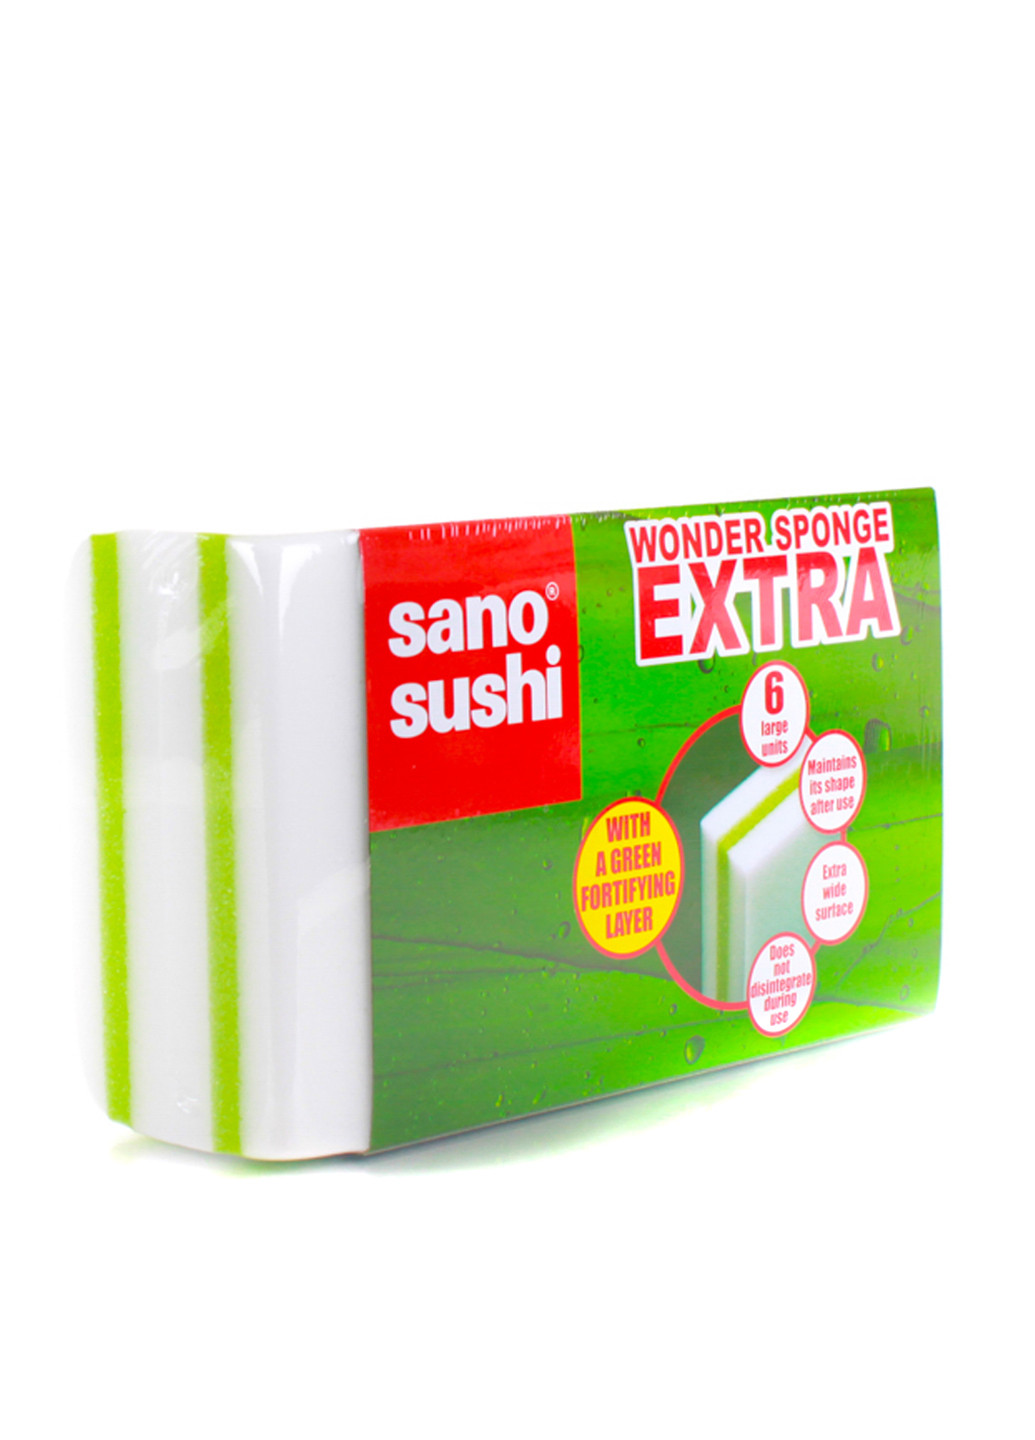 Губка Sushi Wonder Sponge Extra Sano салатовая